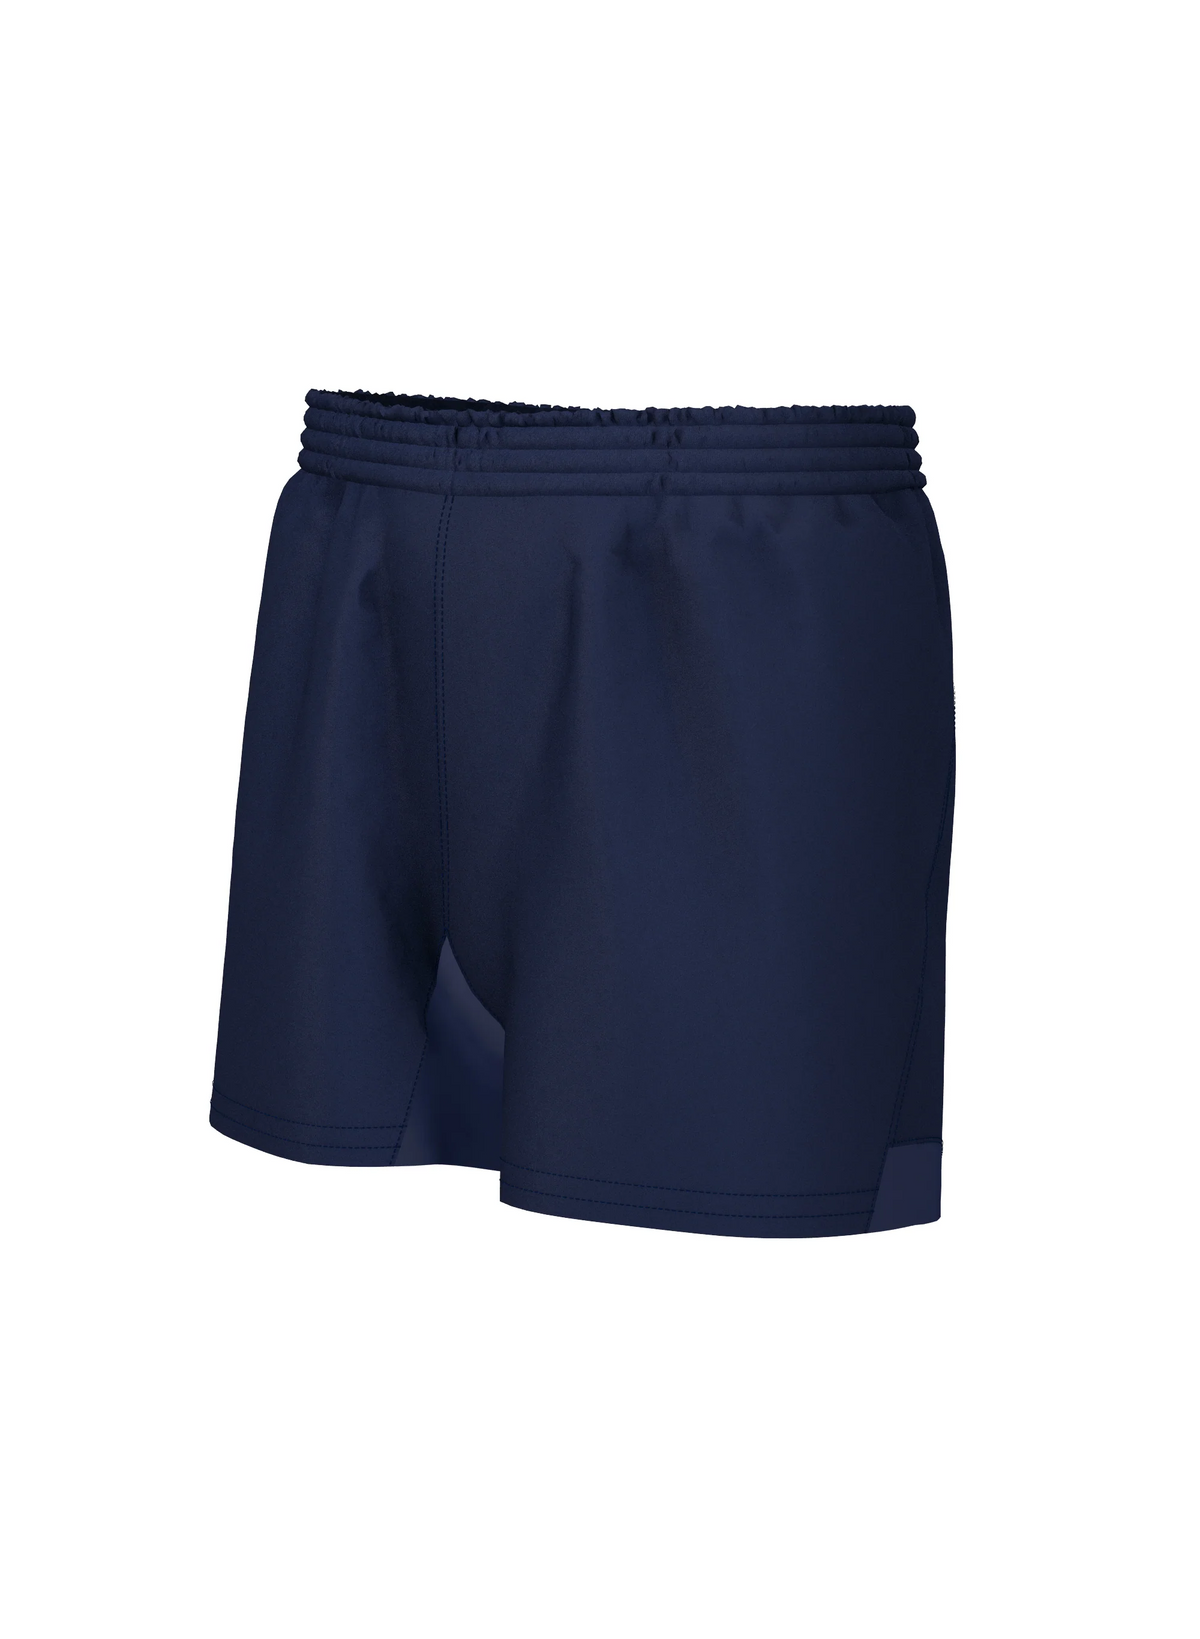 Piranha Rugby Shorts: Navy